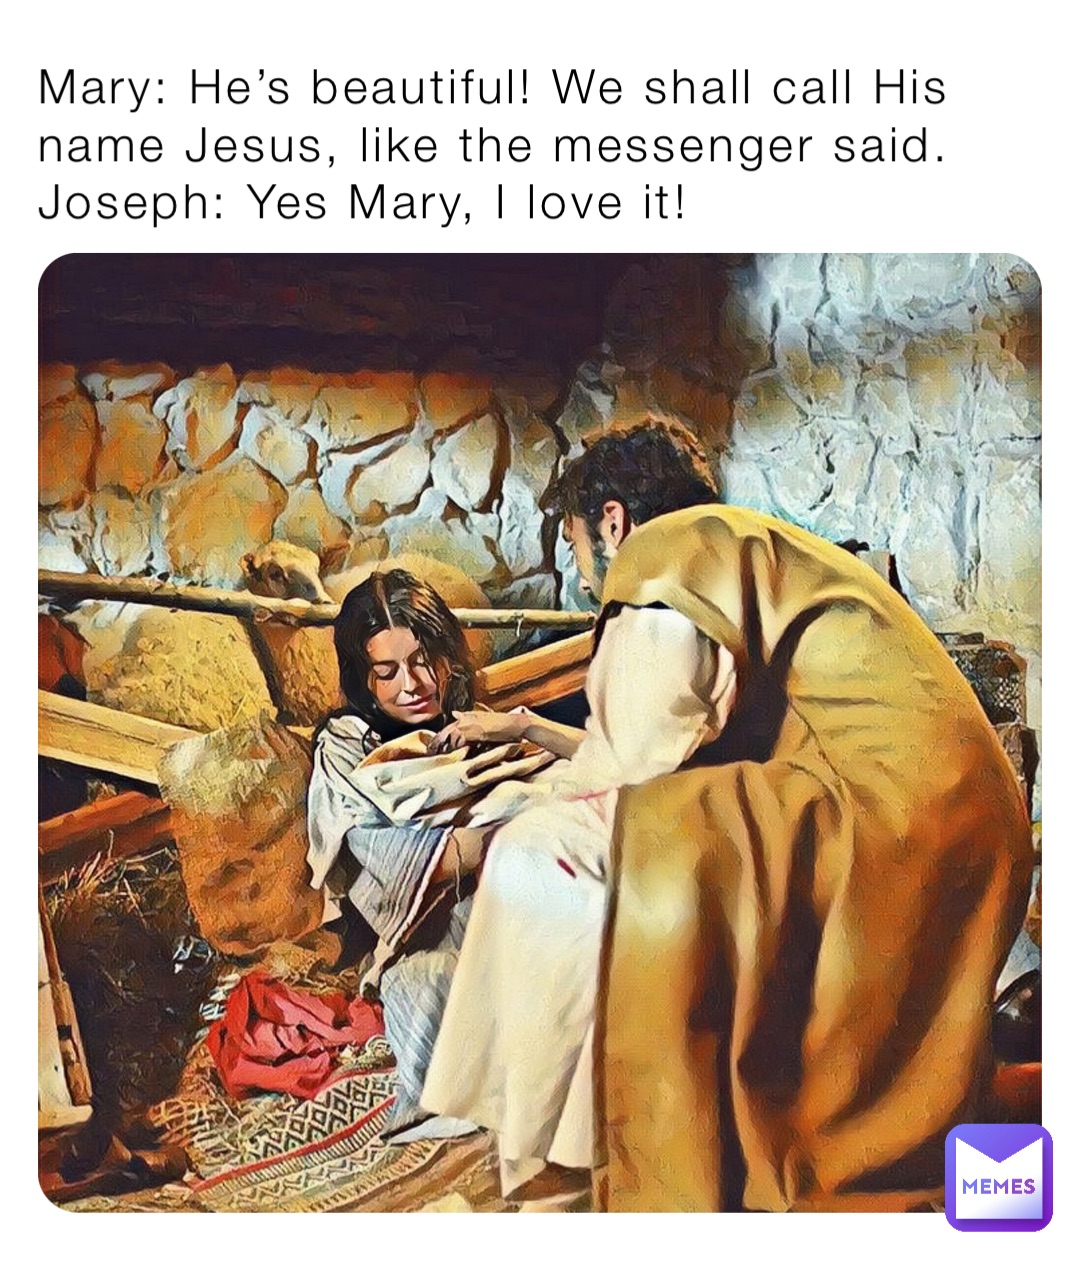 Mary: He’s beautiful! We shall call His name Jesus, like the messenger said.
Joseph: Yes Mary, I love it!